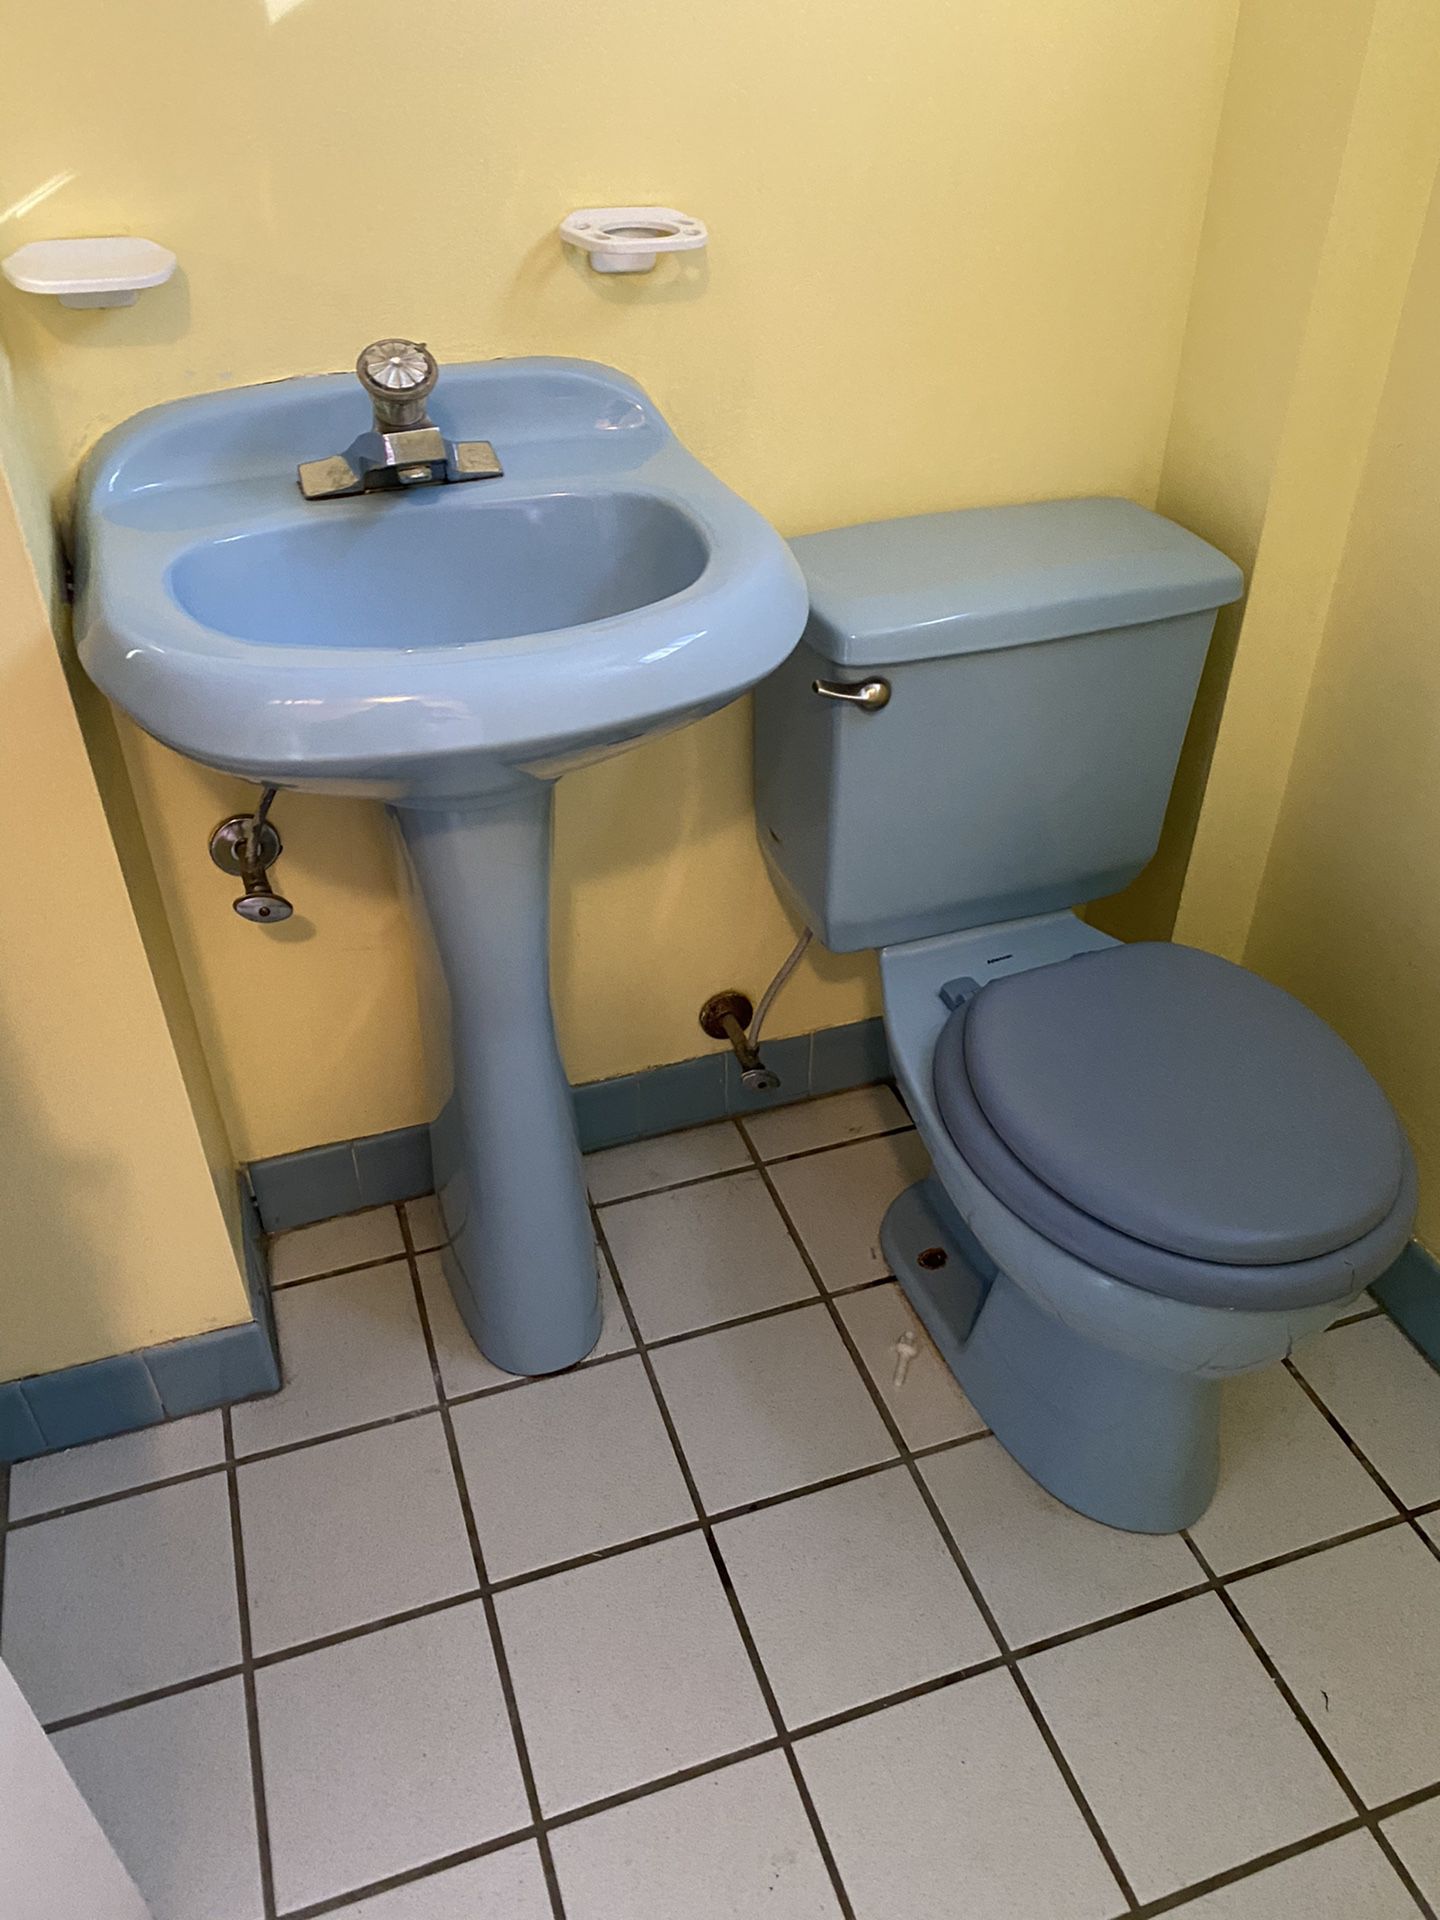 Artesian retro pedestal sink and toilet in blue